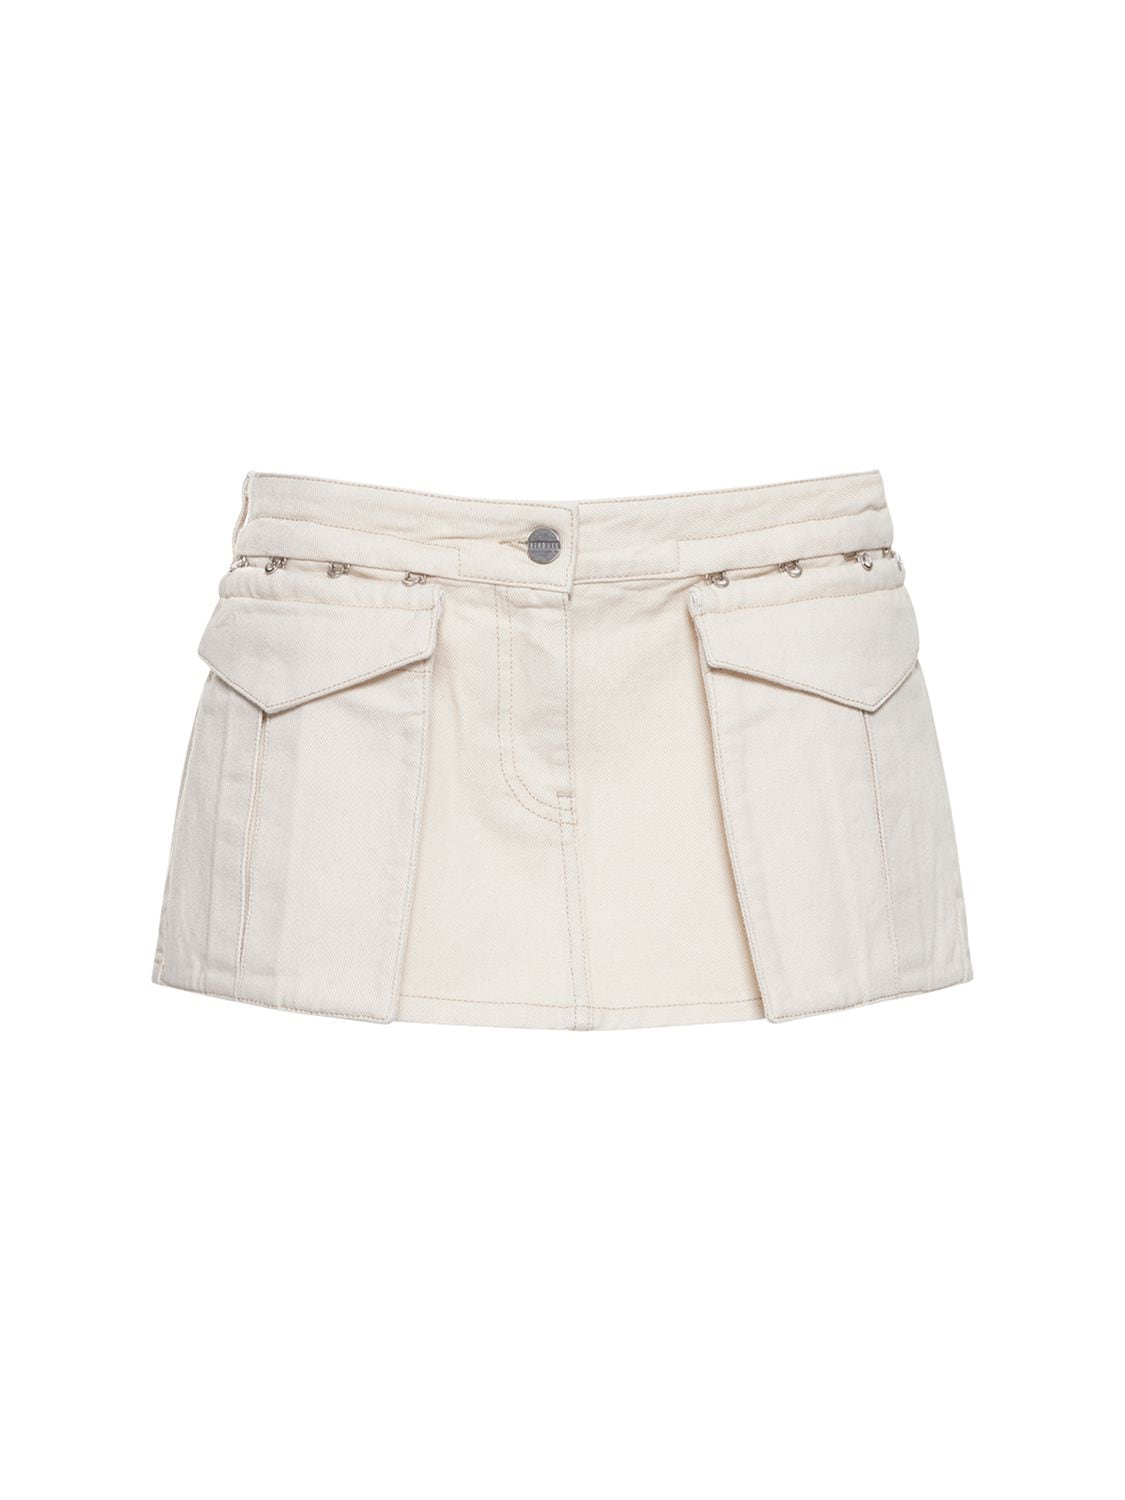 DION LEE Denim Cargo Mini Skirt W/ Pockets